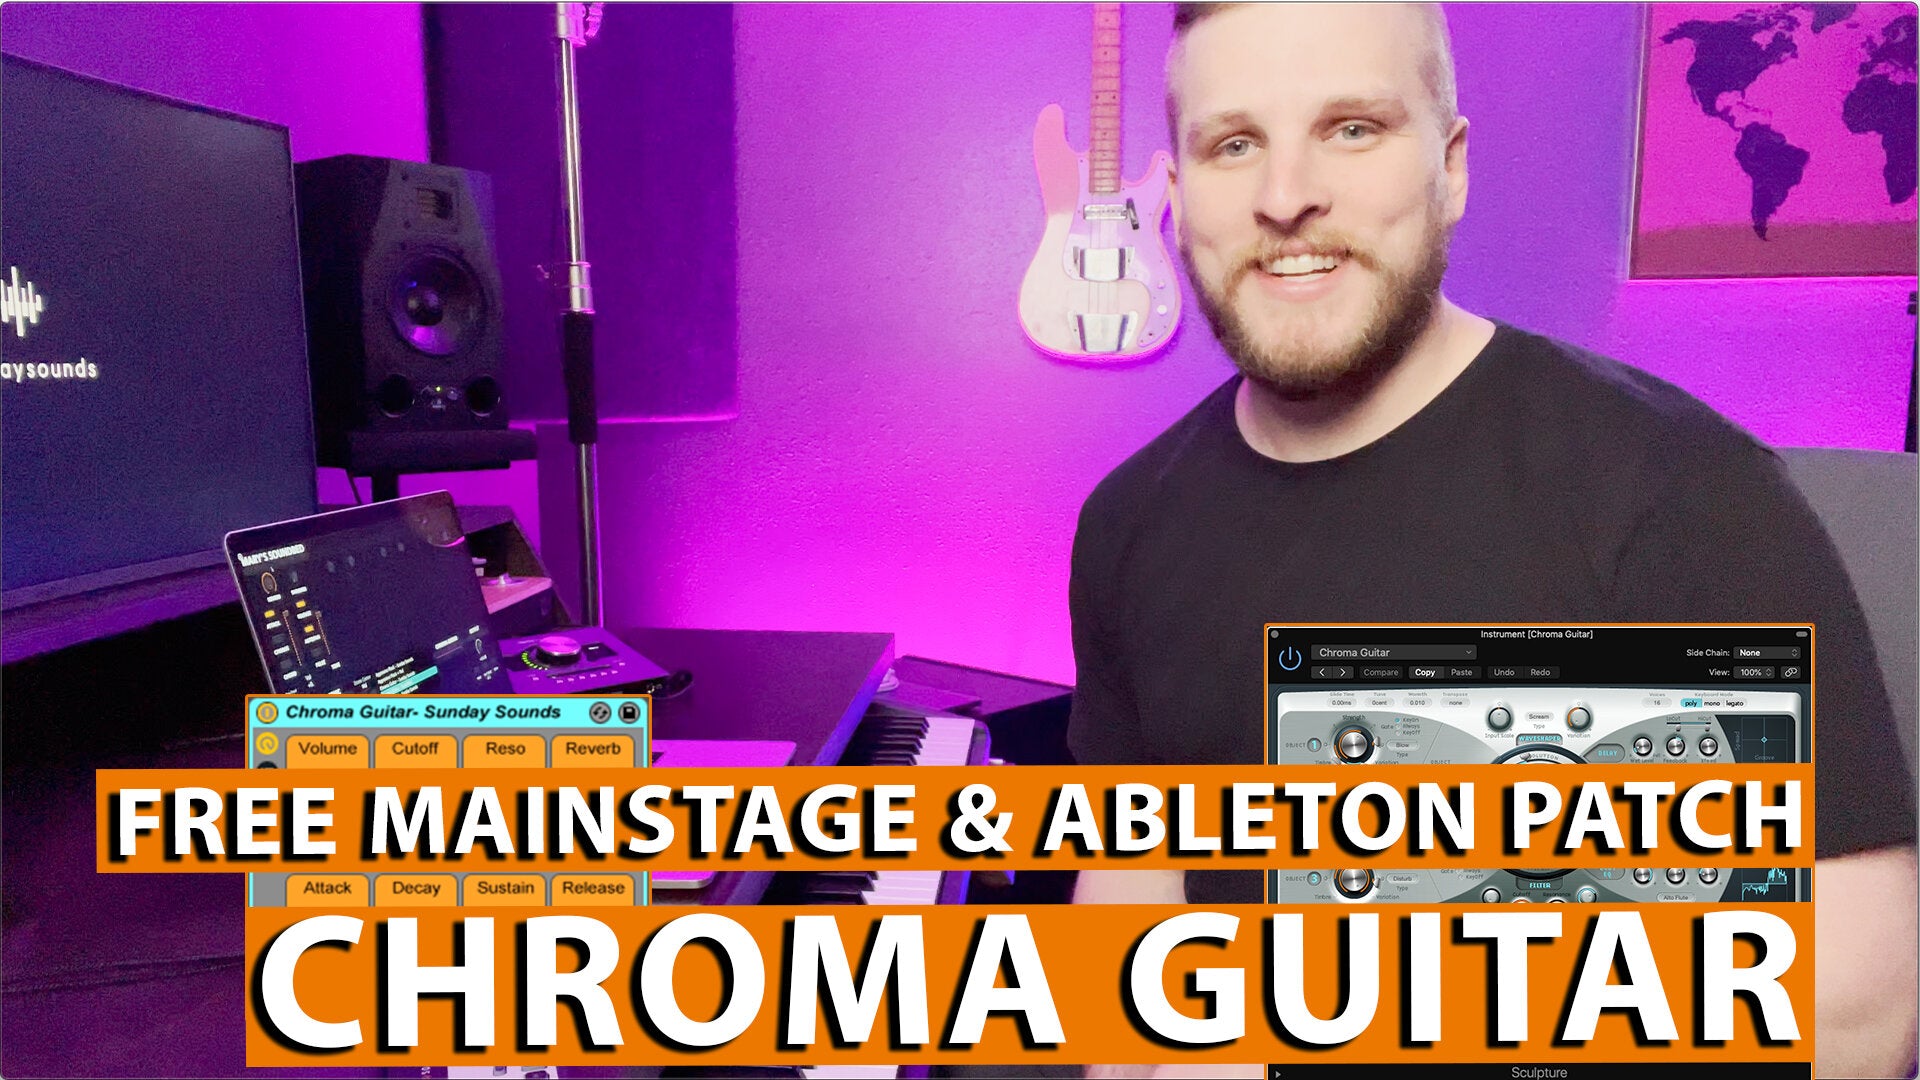 Free MainStage & Ableton Worship Patch! - Chroma Guitar